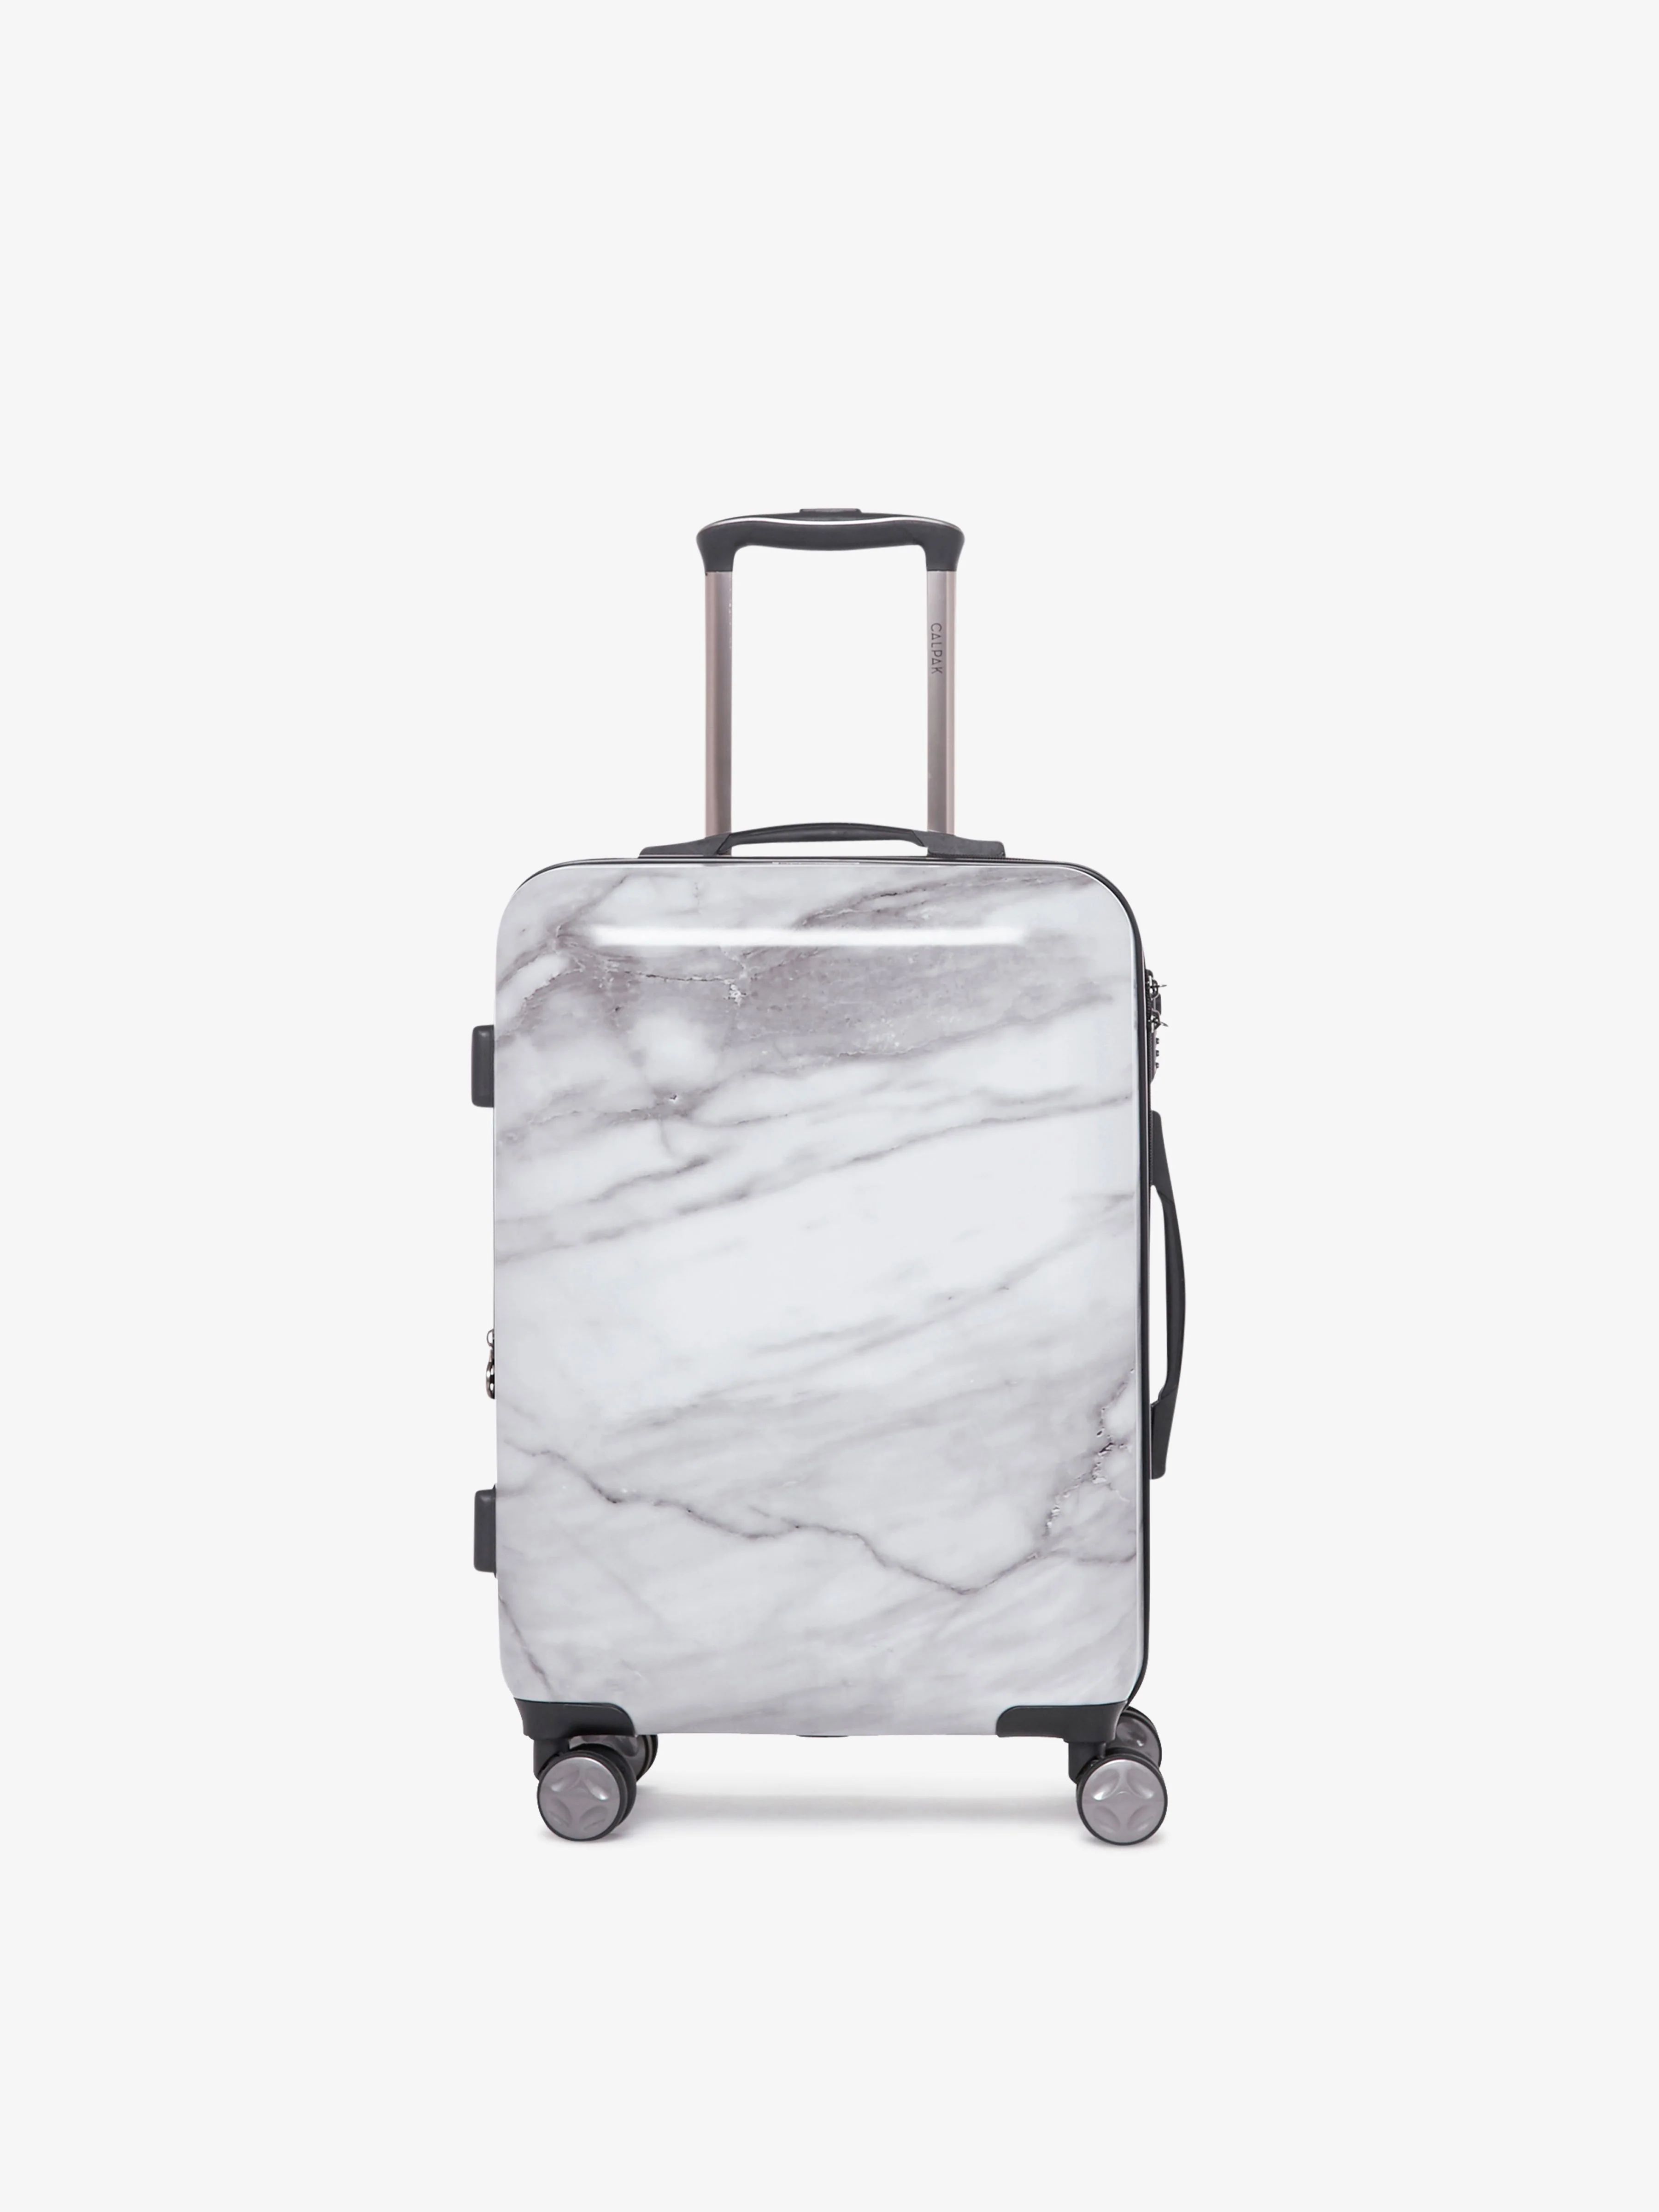 Astyll Carry-On Luggage | CALPAK | CALPAK Travel